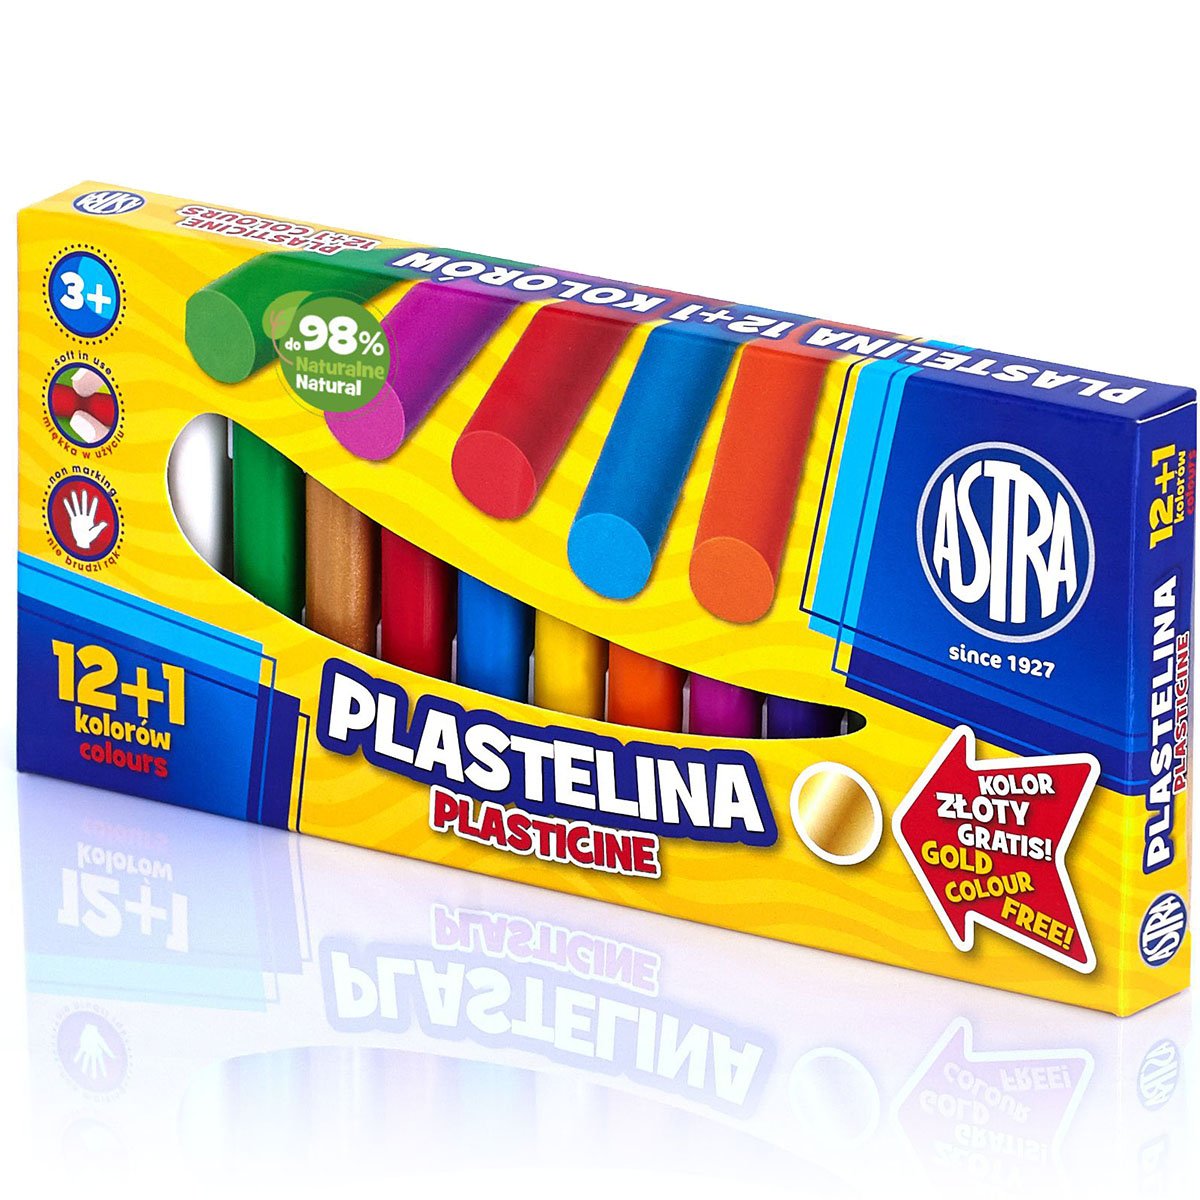 Plastelina Astra 13 kolorów - 12+1 kolor gratis